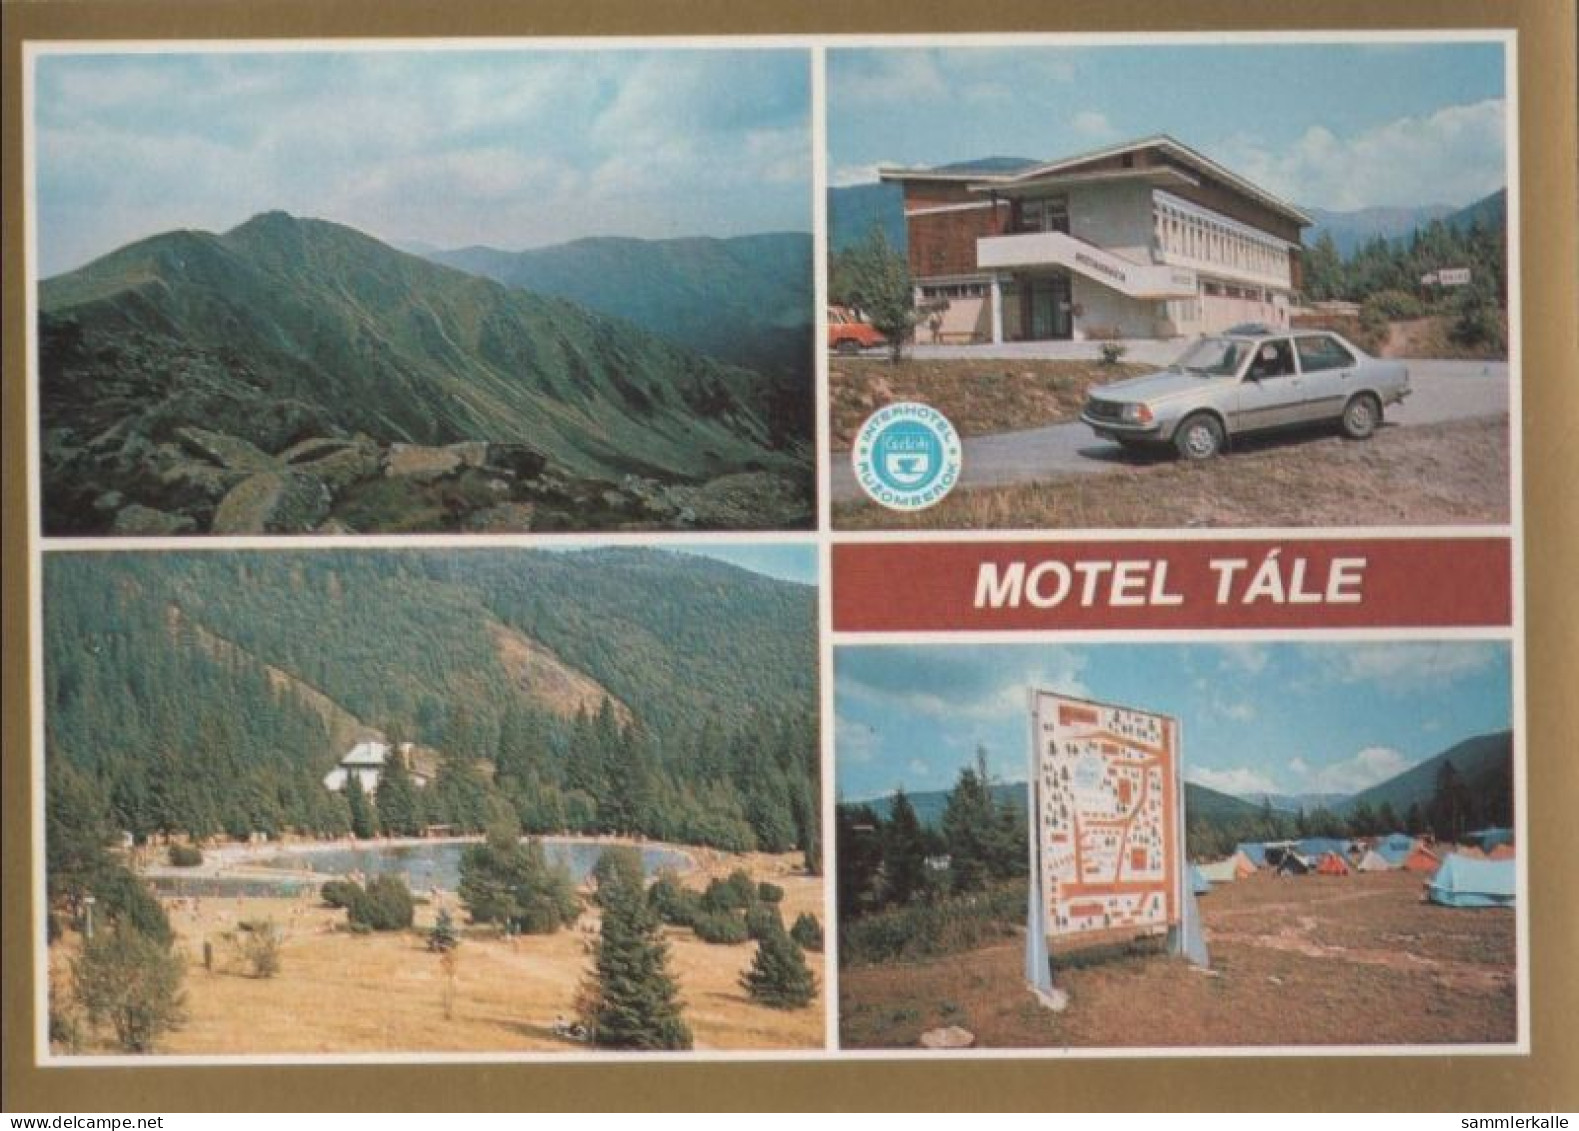 109579 - Nizke Tatry - Niedere Tatra - Tschechien - Motel Tale - Slovakia